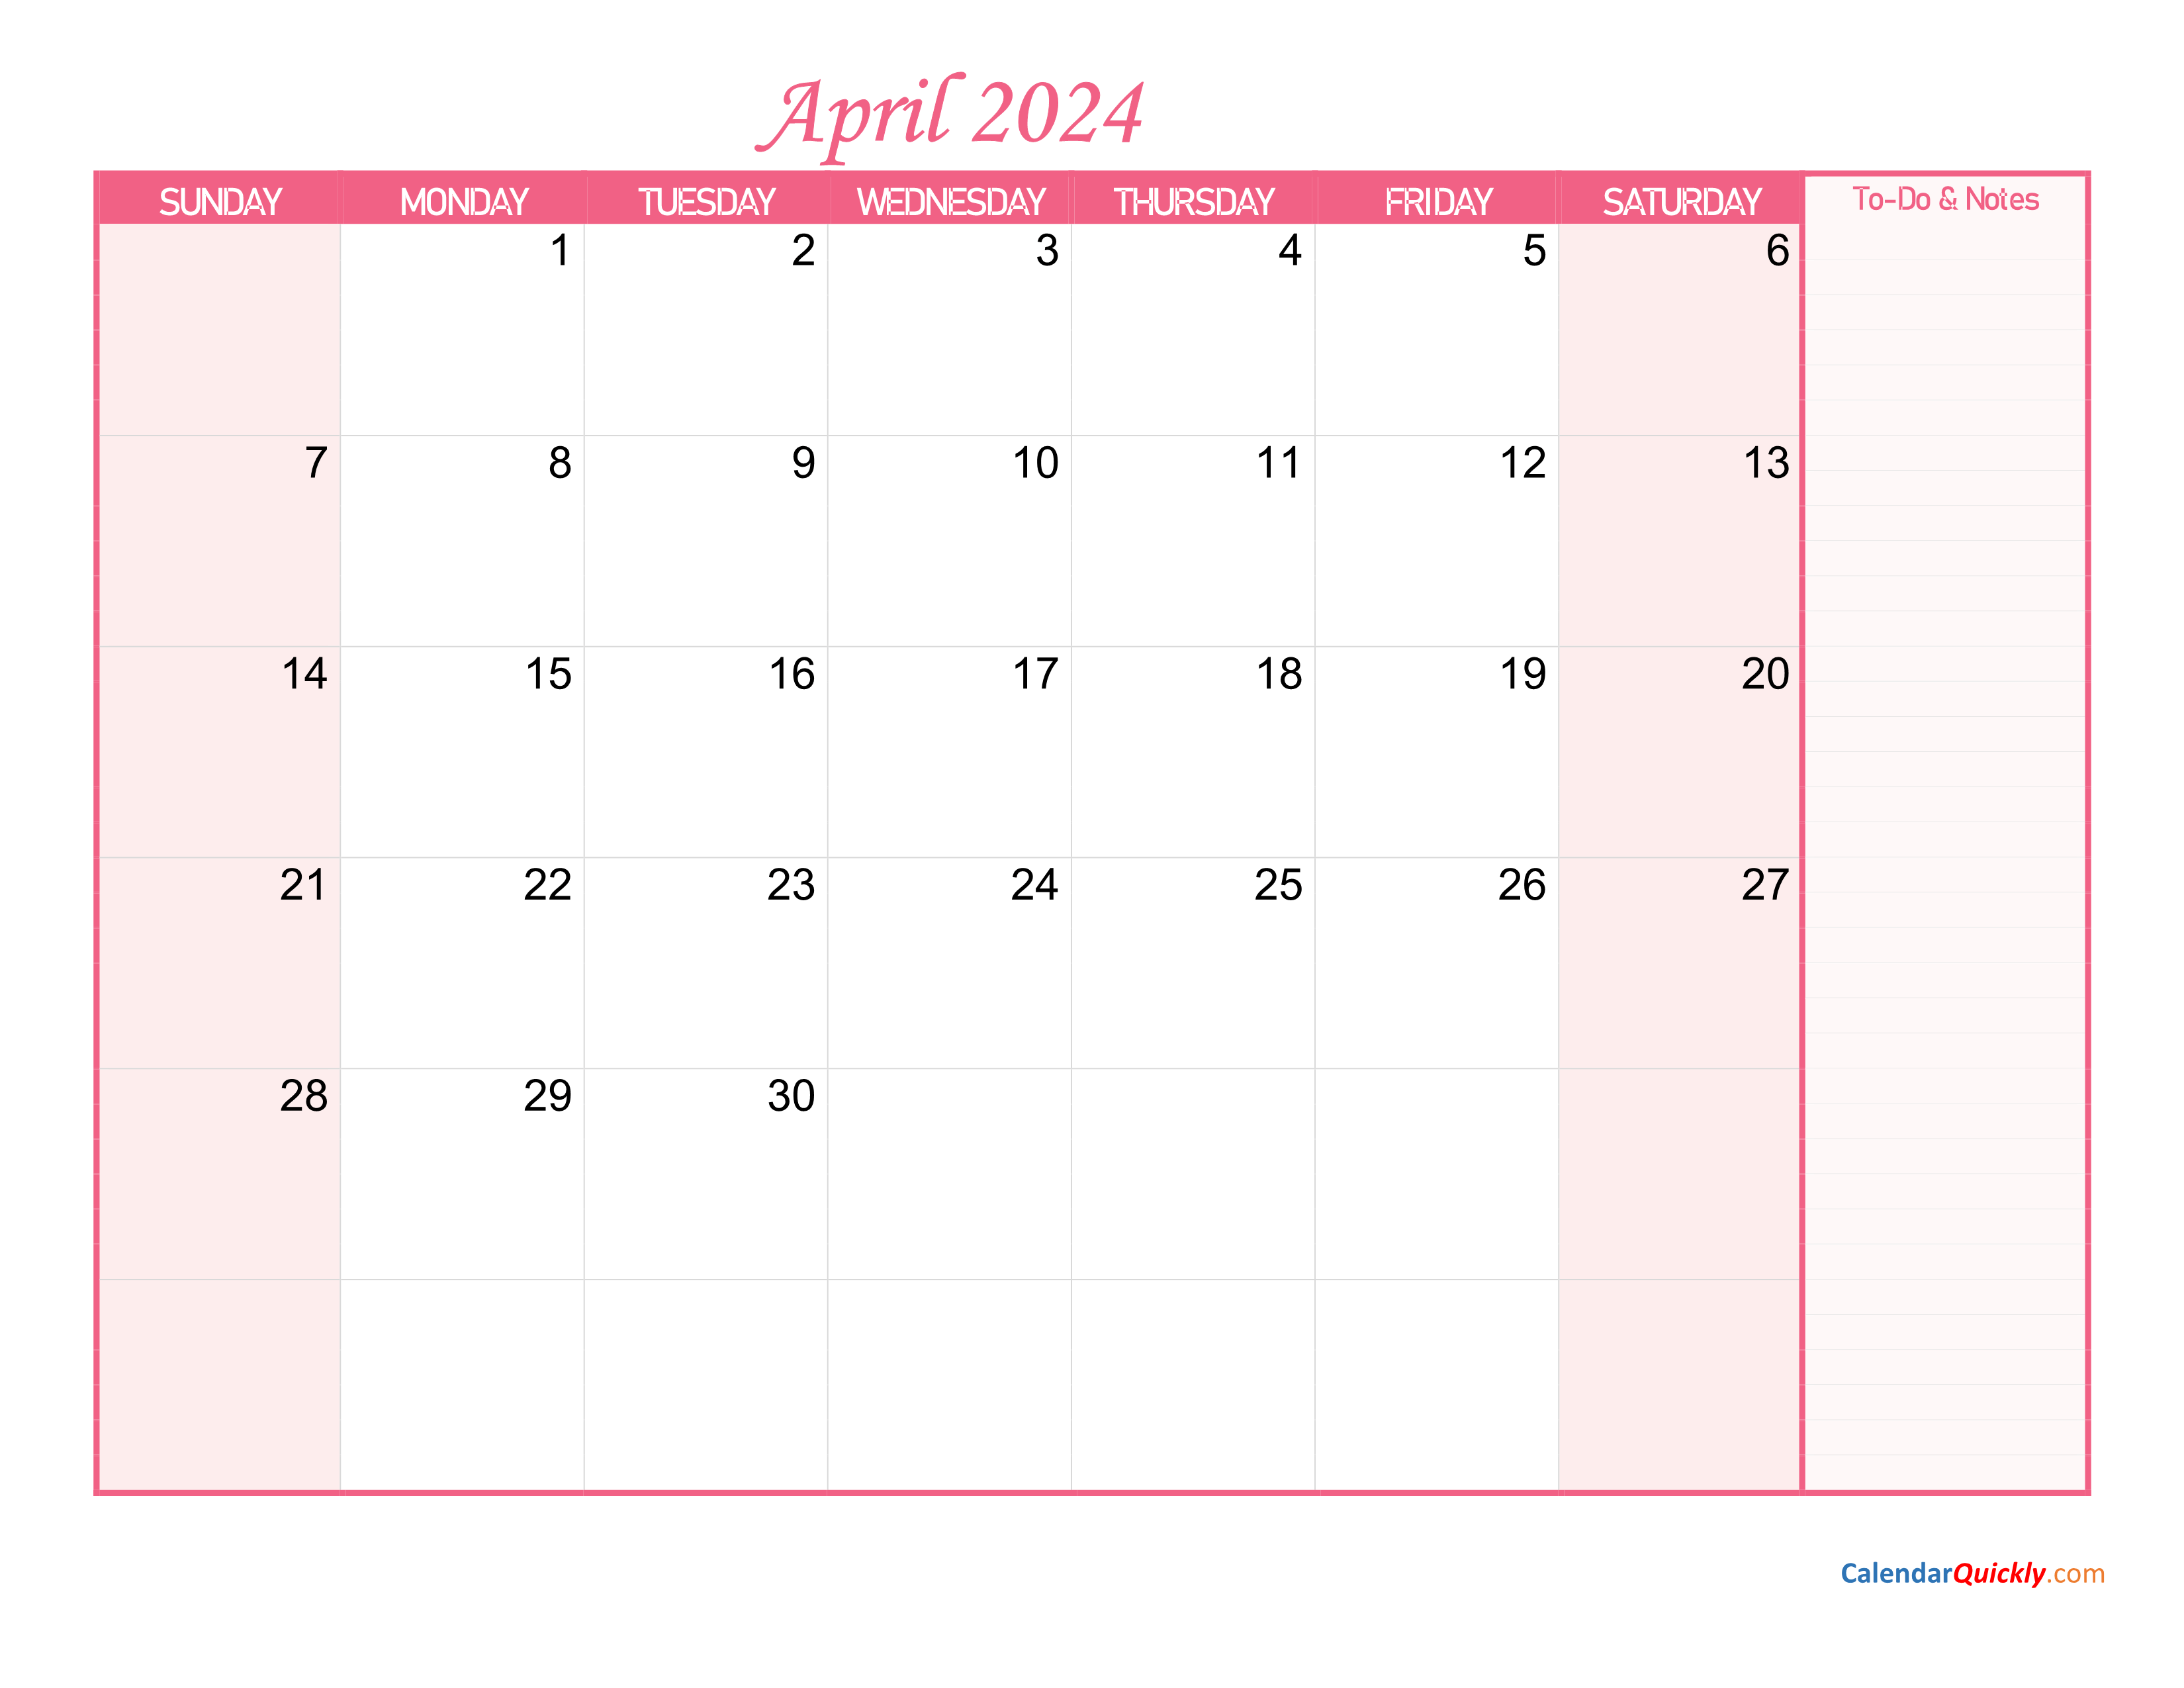 April Calendar 2024 with Notes Calendar Quickly